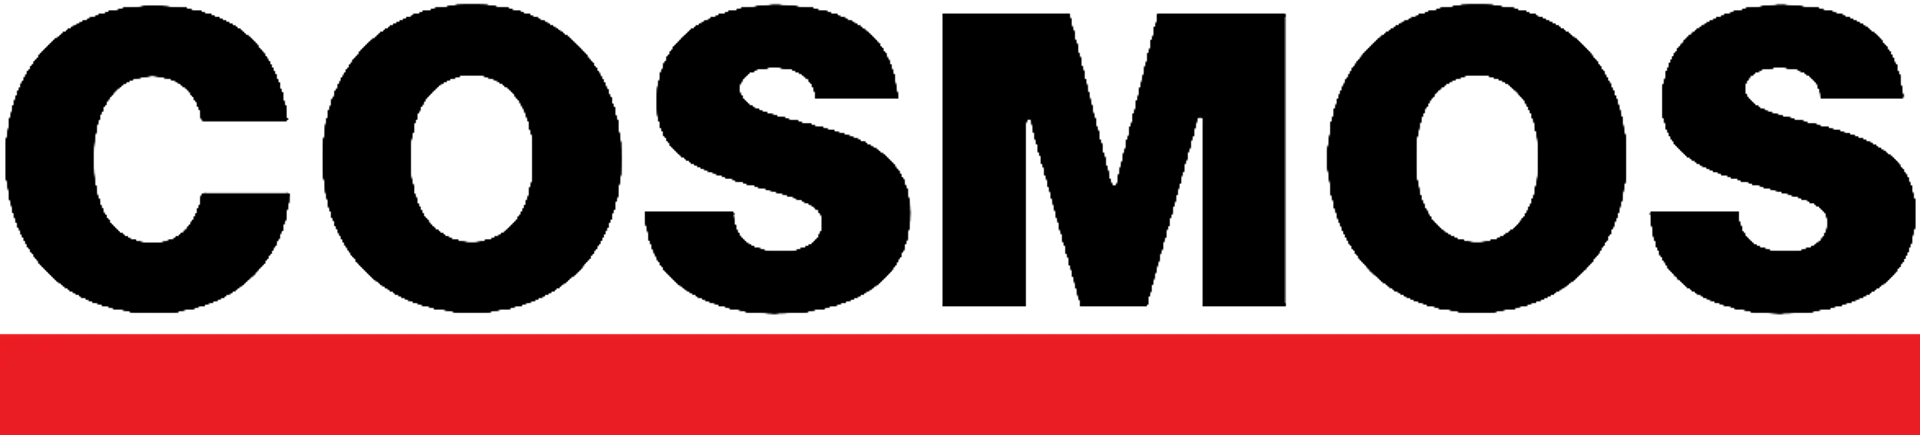 COSMOS SPORT logo